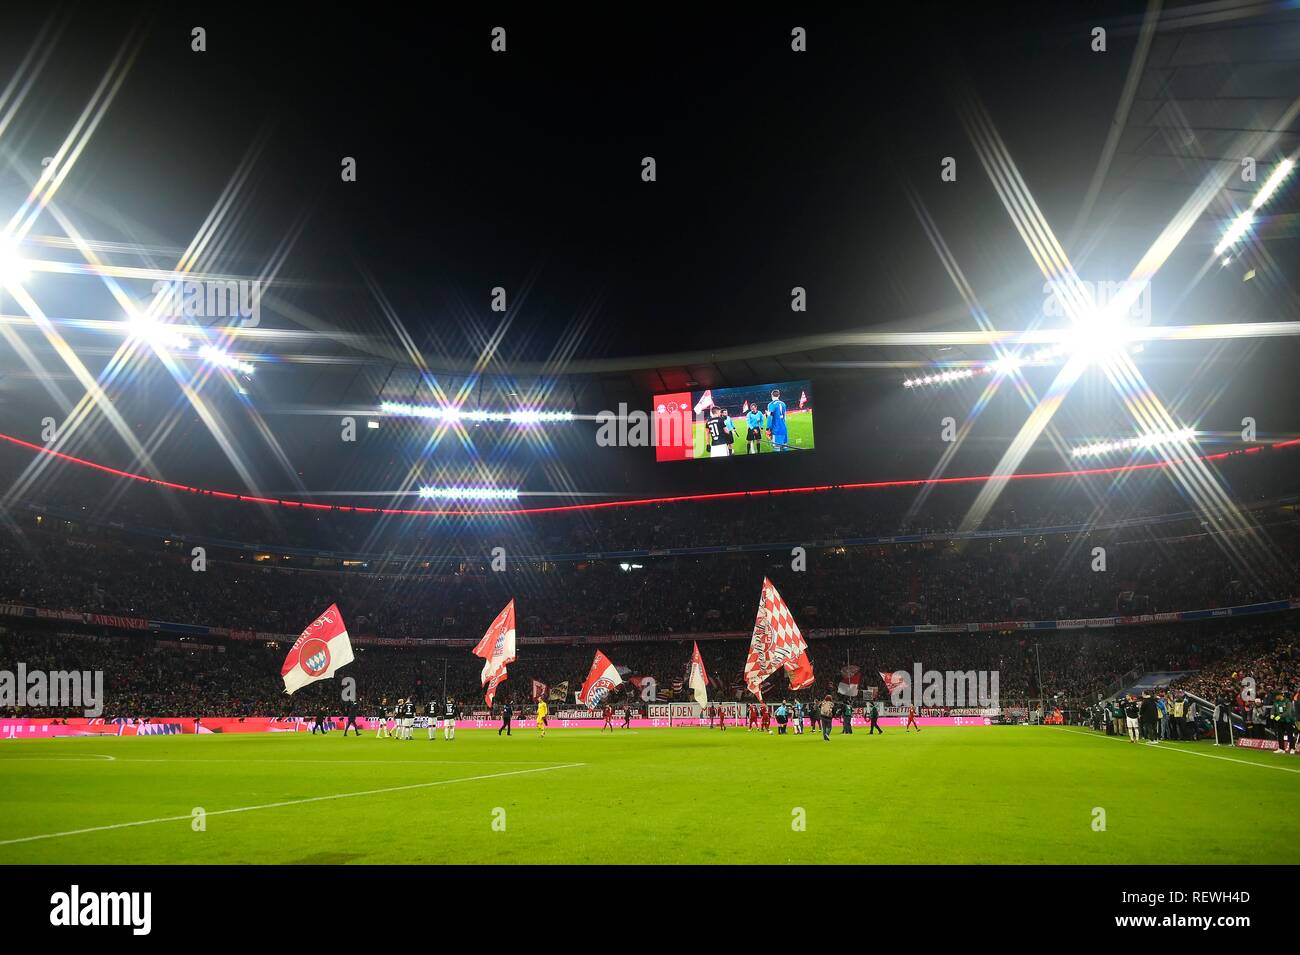 Bundesliga, start of match, choice of seat on scoreboard, Allianz Arena, Munich, Bavaria, Germany Stock Photo